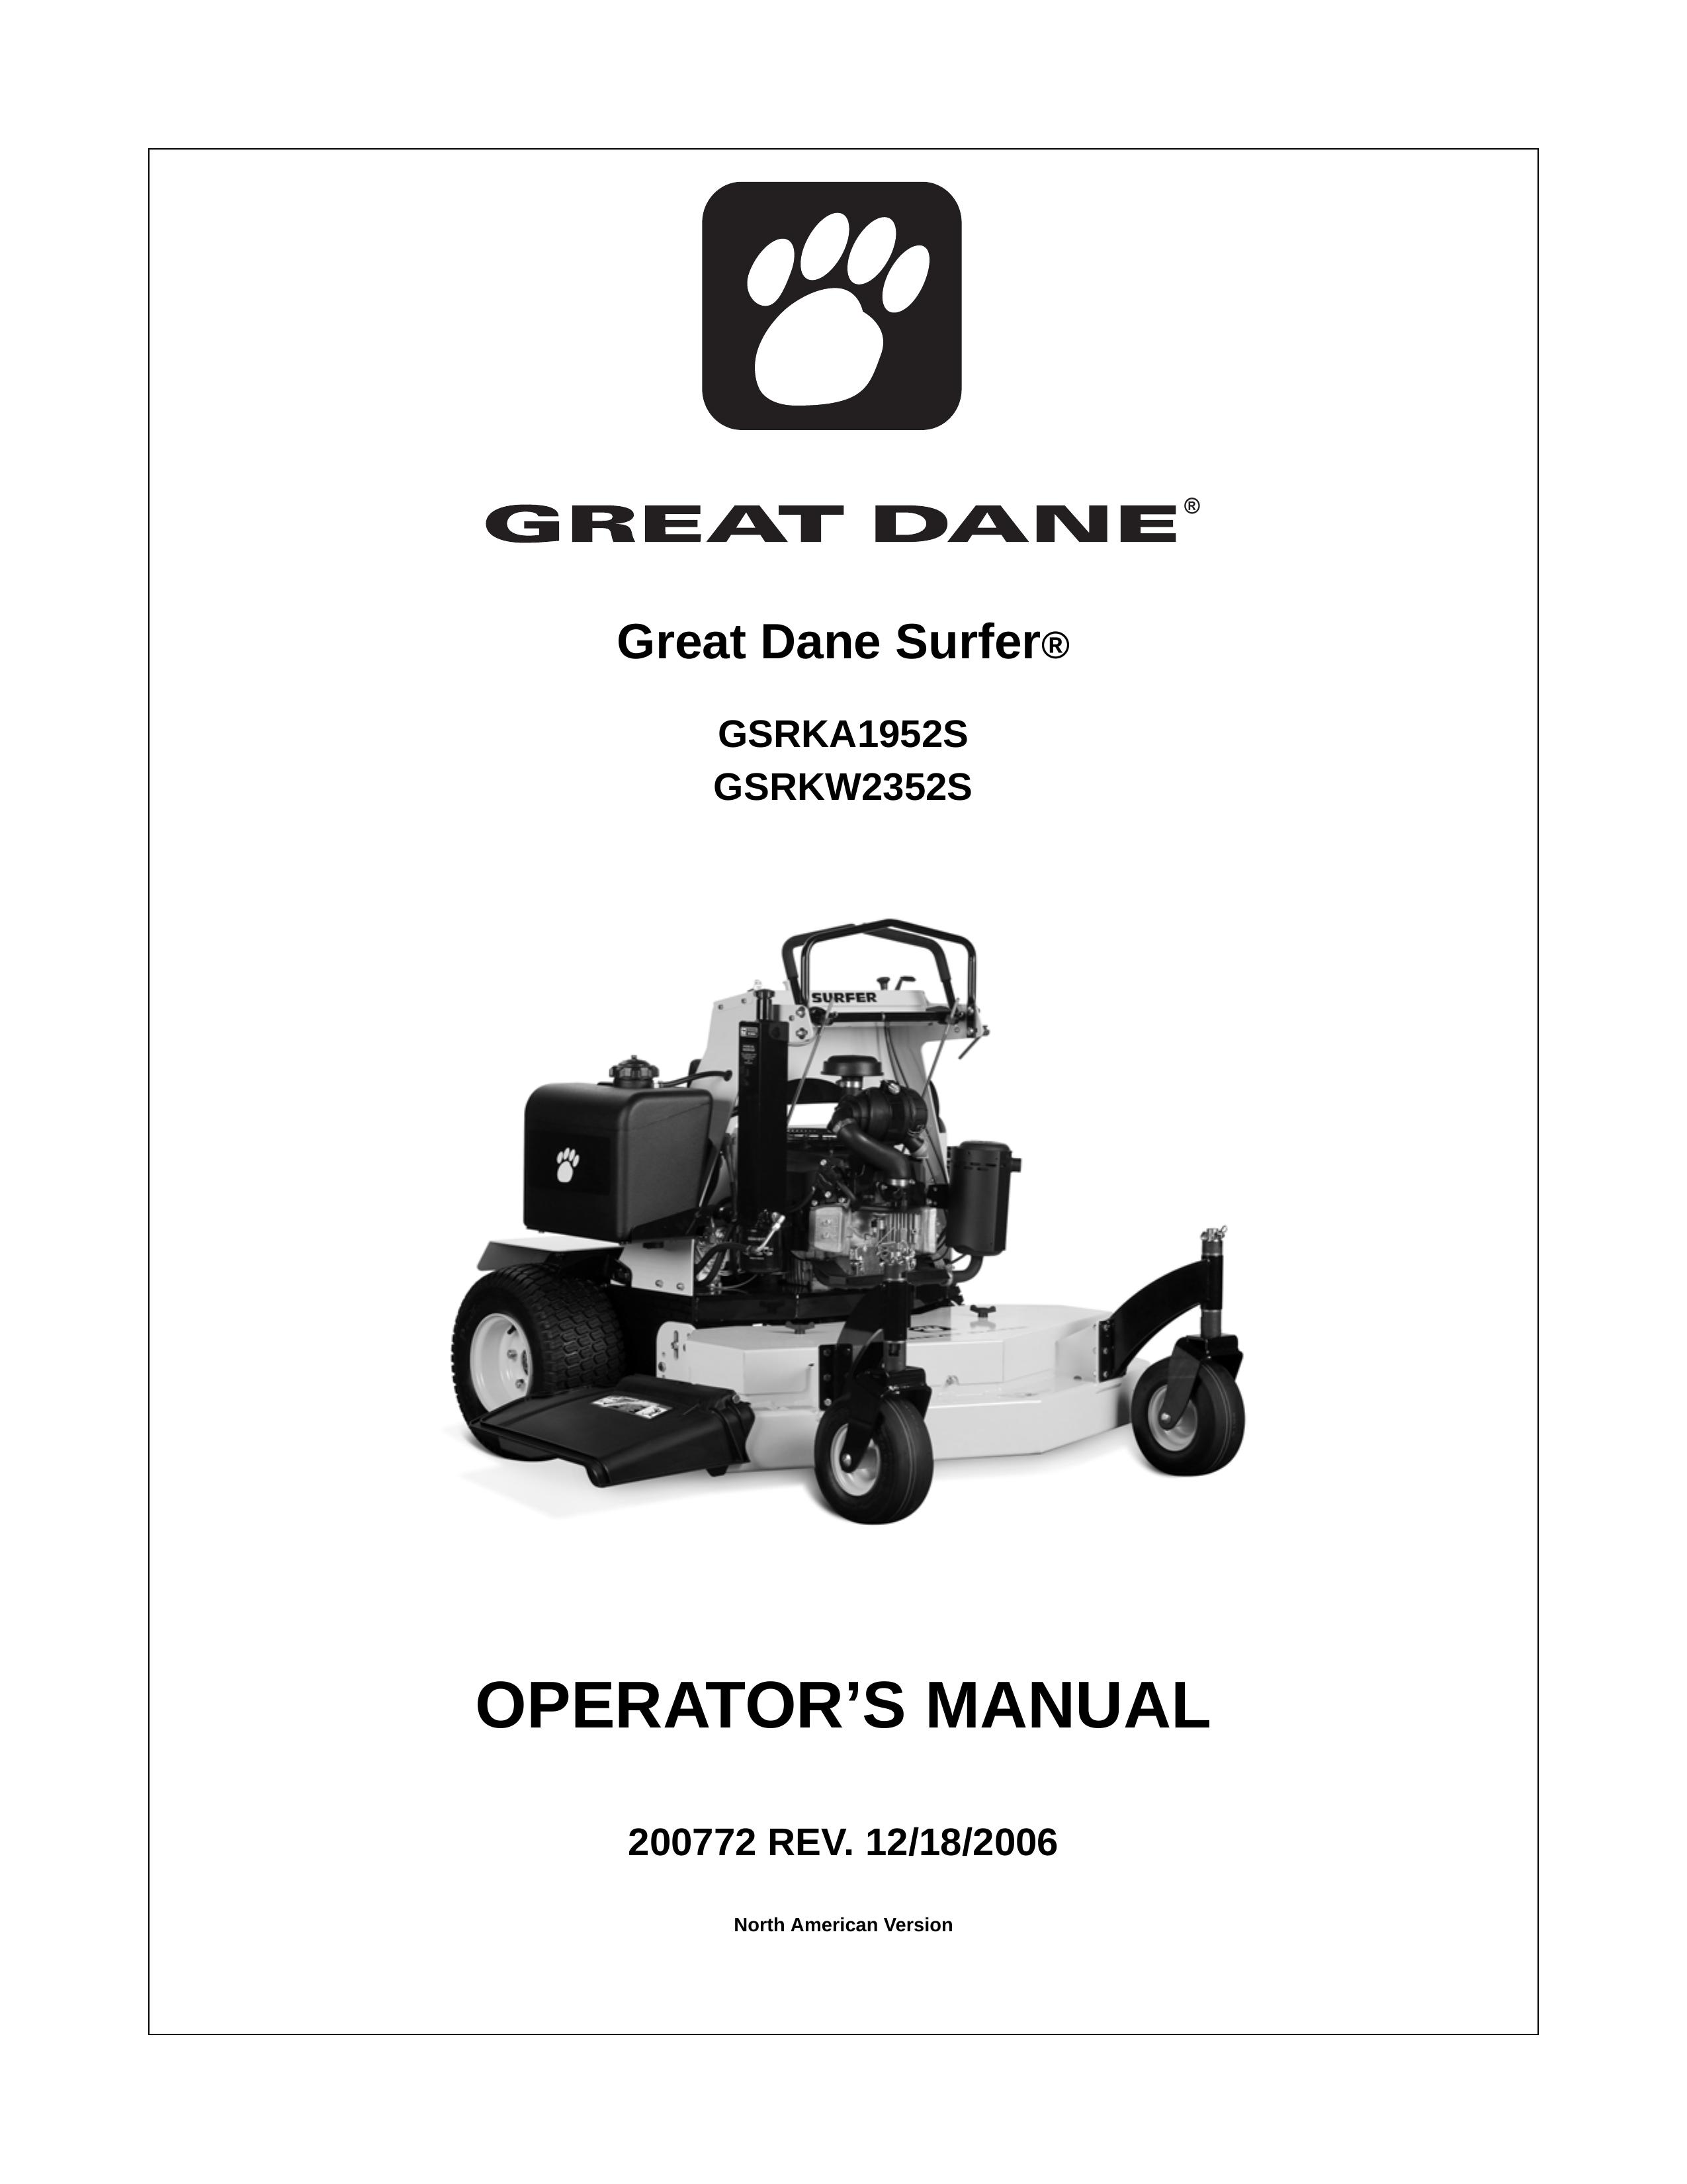 Great Dane GSRKW2352S Lawn Mower User Manual